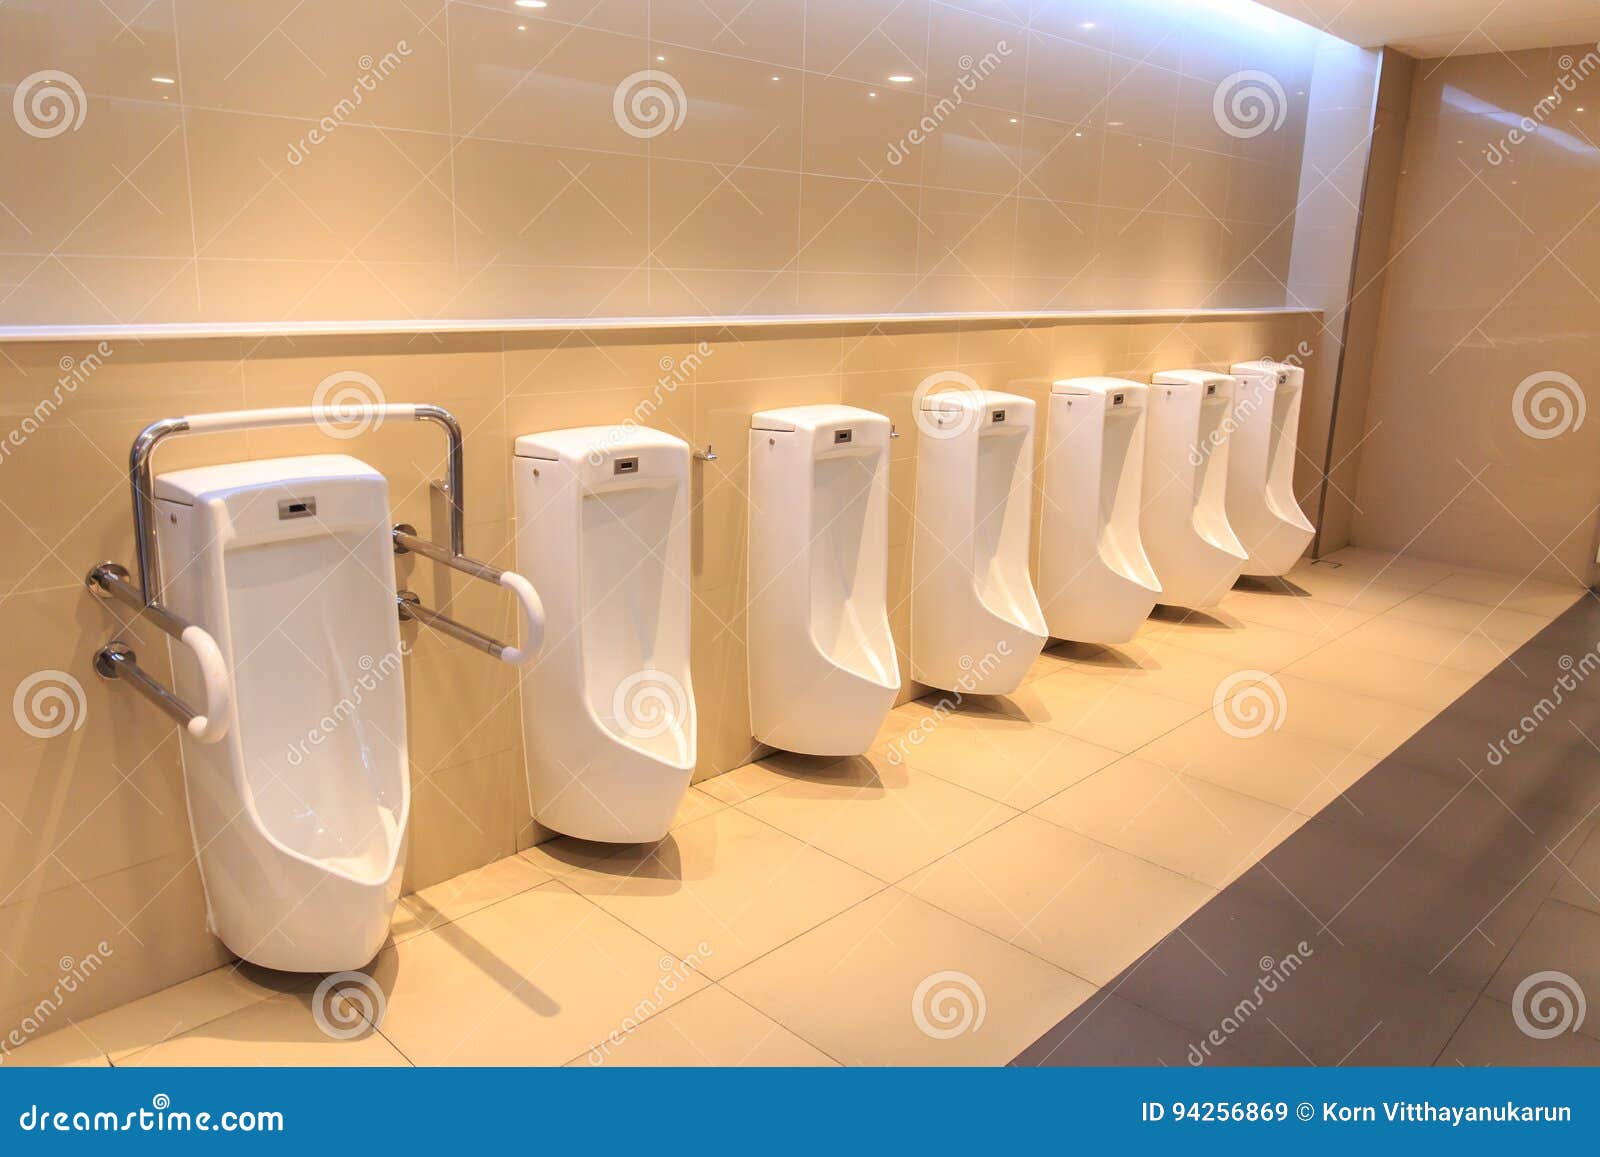 Clean Men Toilet Urine Sink Row Stock Image Image Of Clean